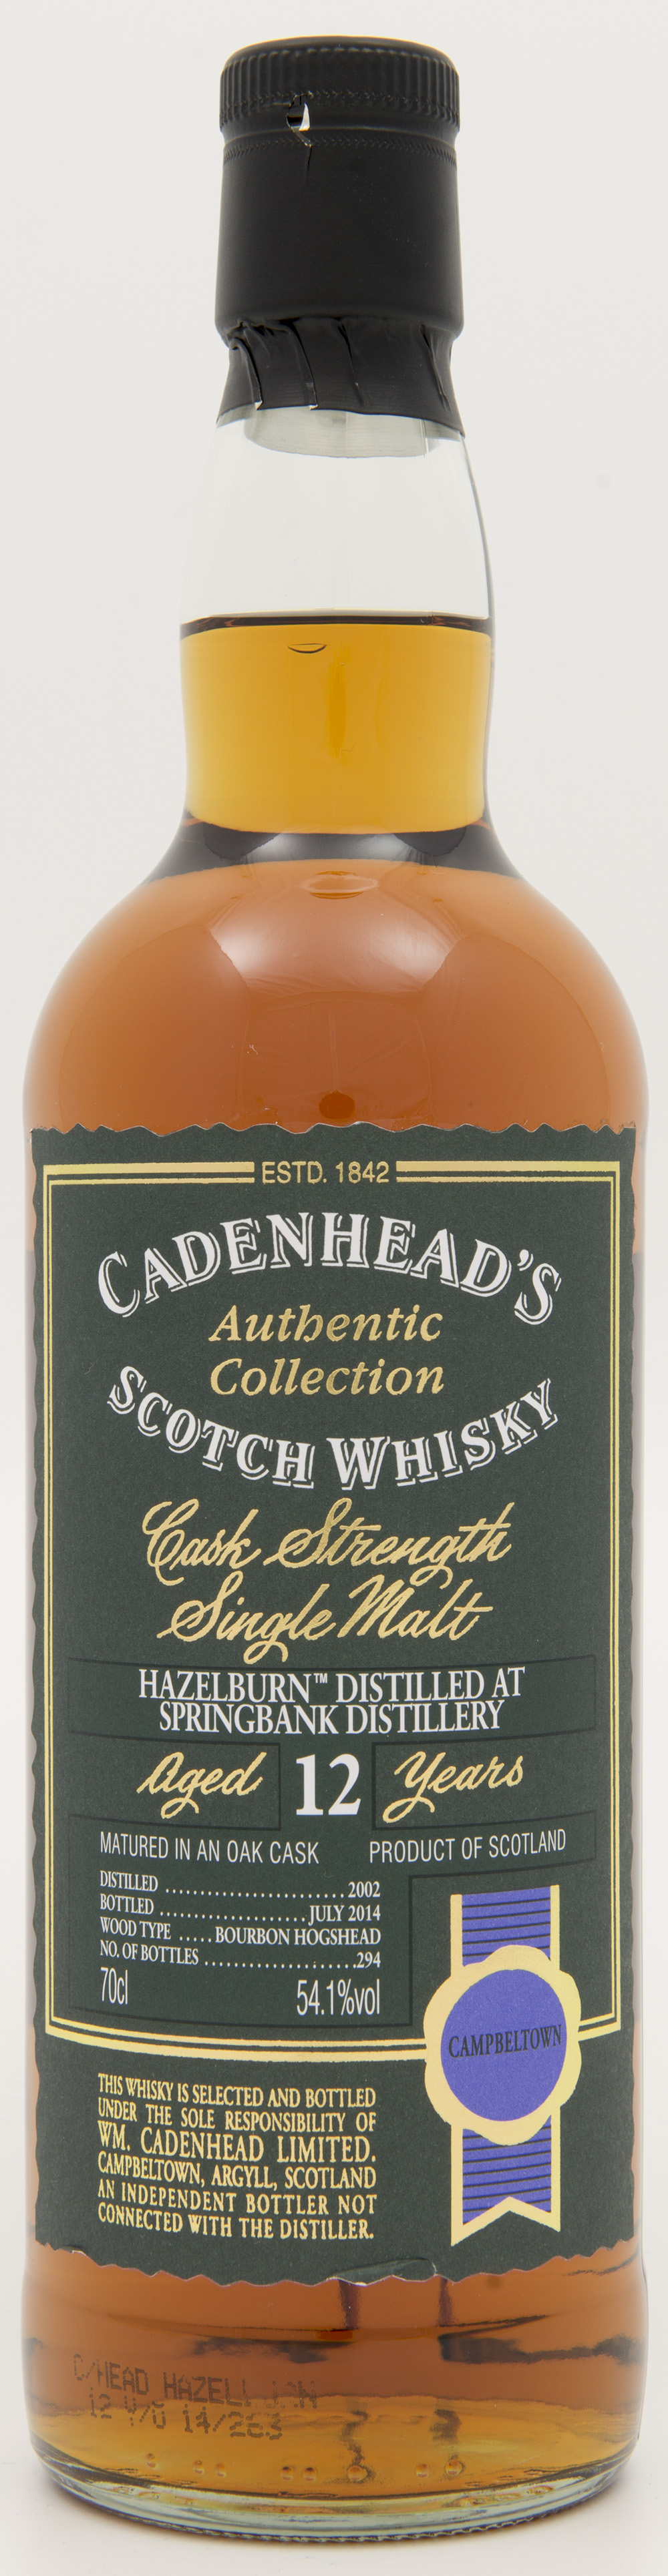 Billede: DSC_4825 Cadenheads Authentic Collection - Hazelburn 12 yers - 2002 - 2014 - bottle front.jpg